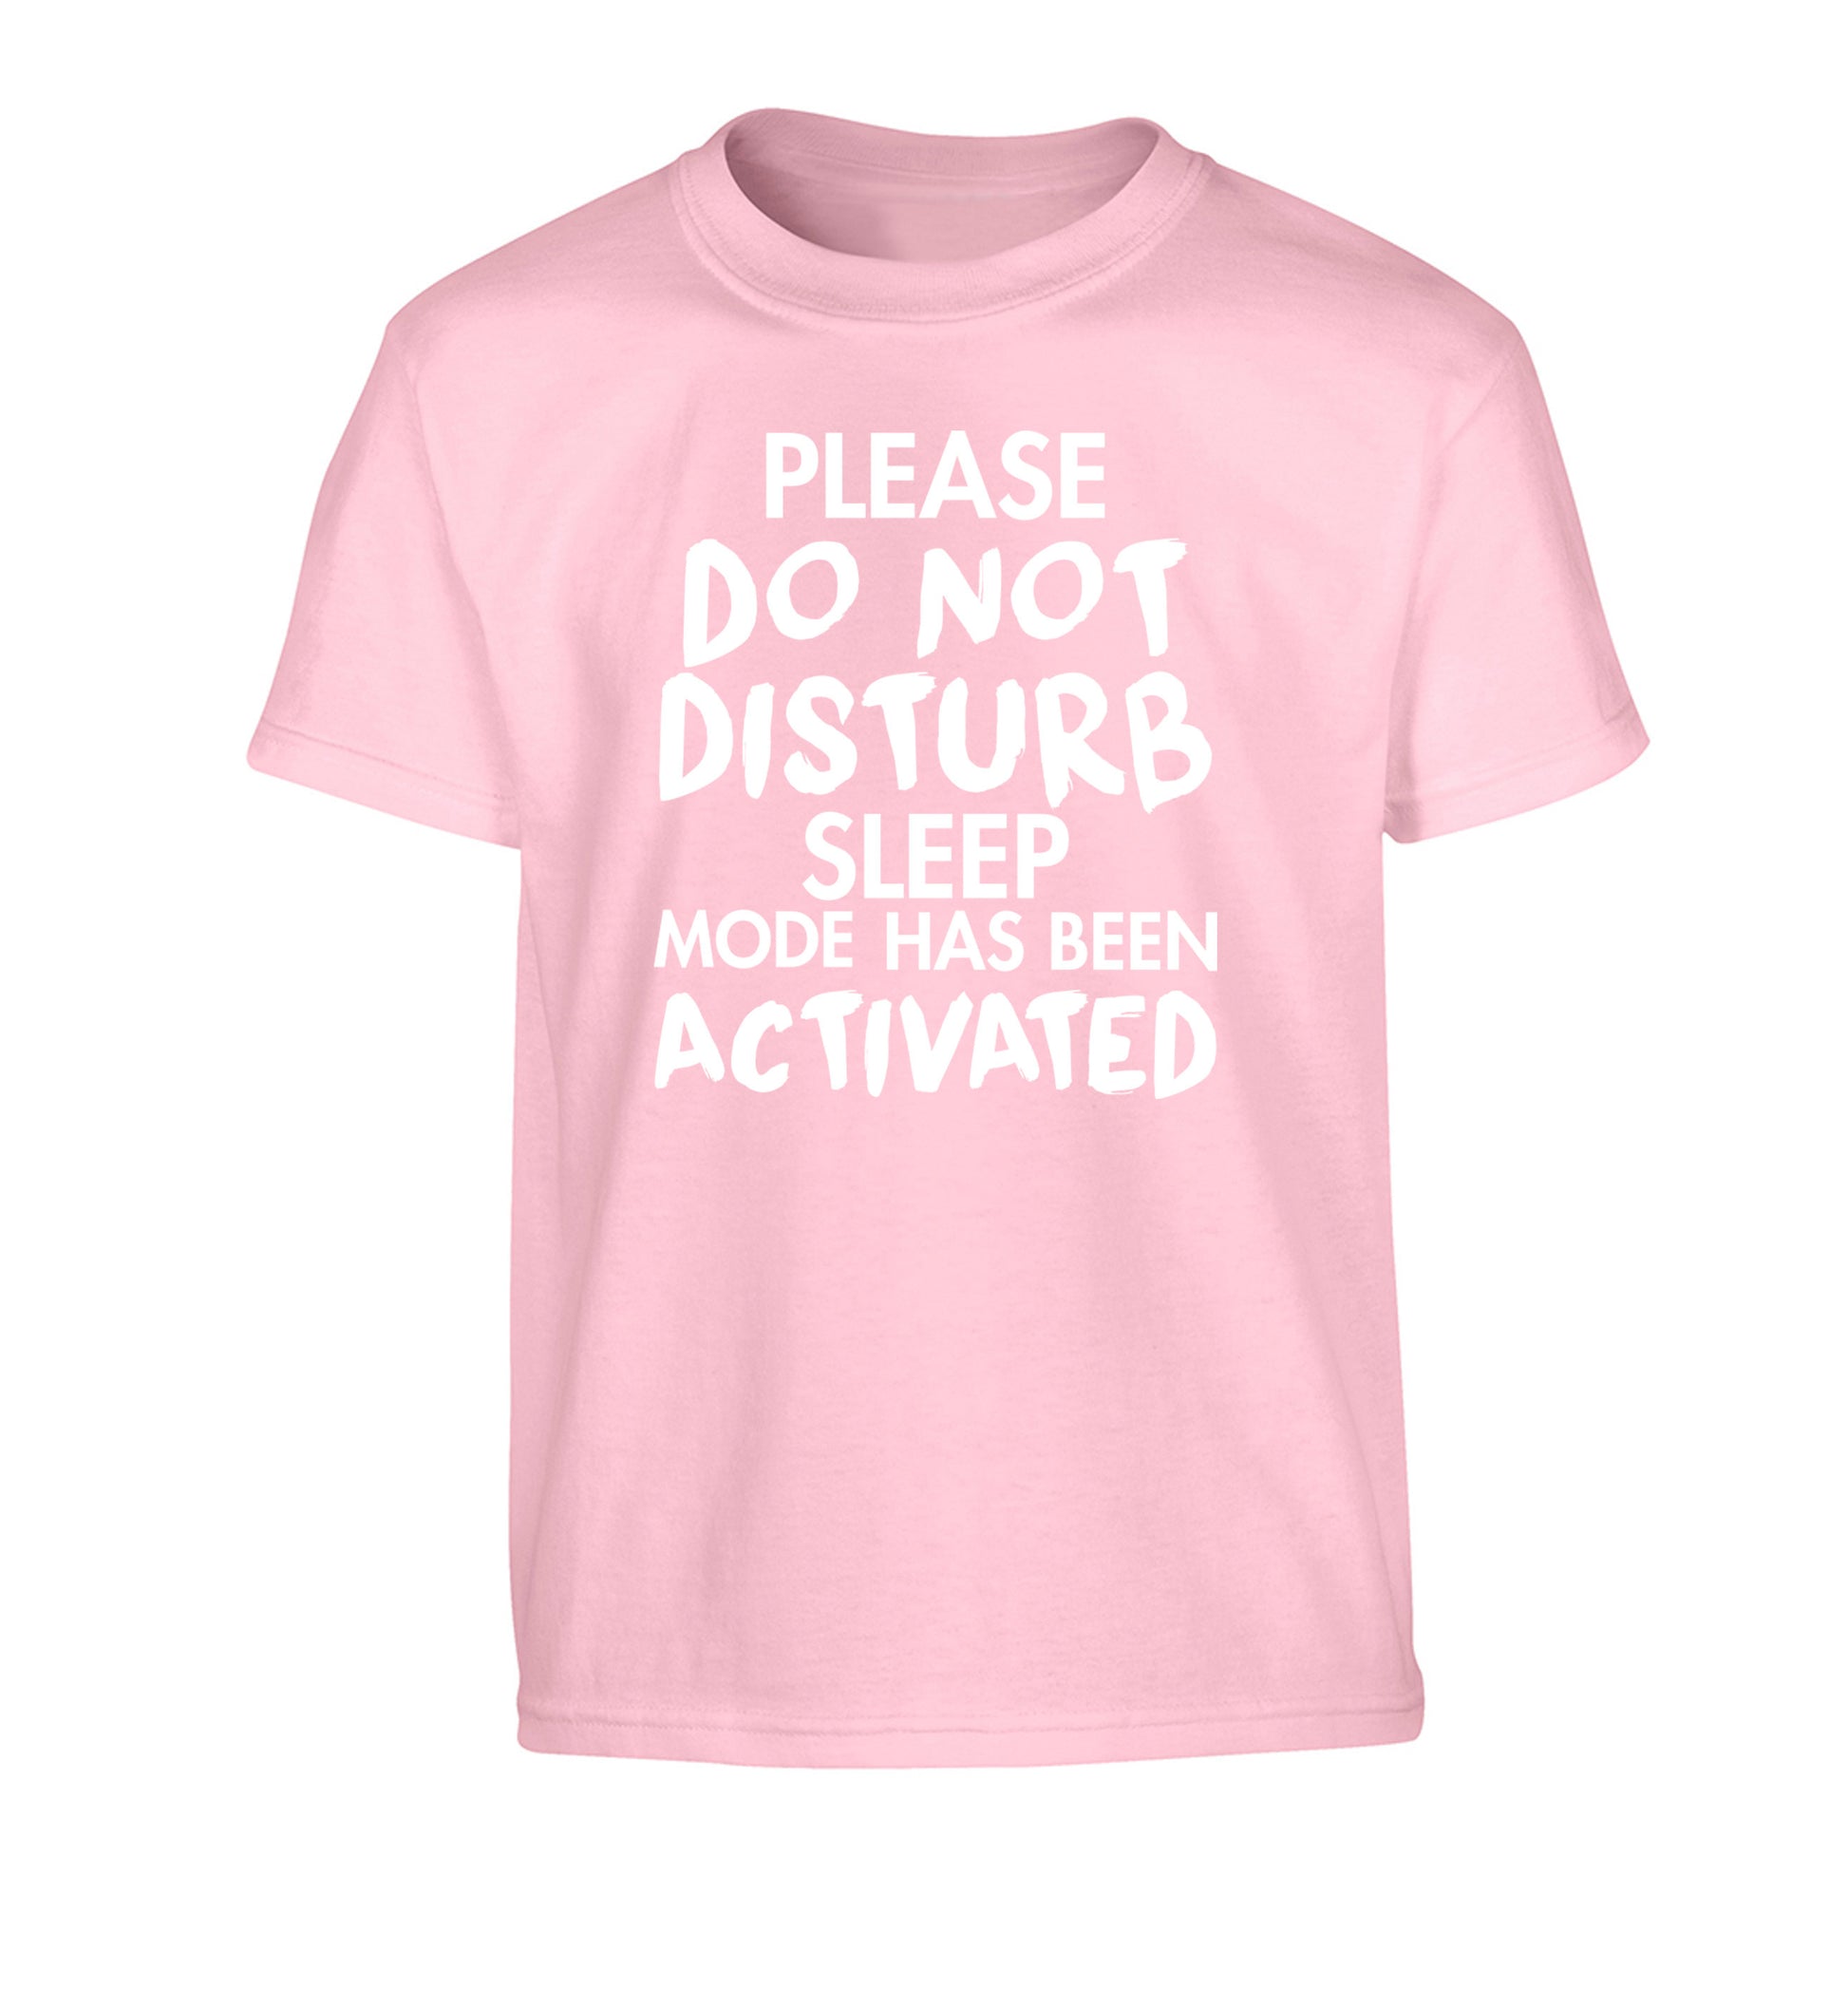 Please do not disturb sleeping mode has been activated Children's light pink Tshirt 12-14 Years